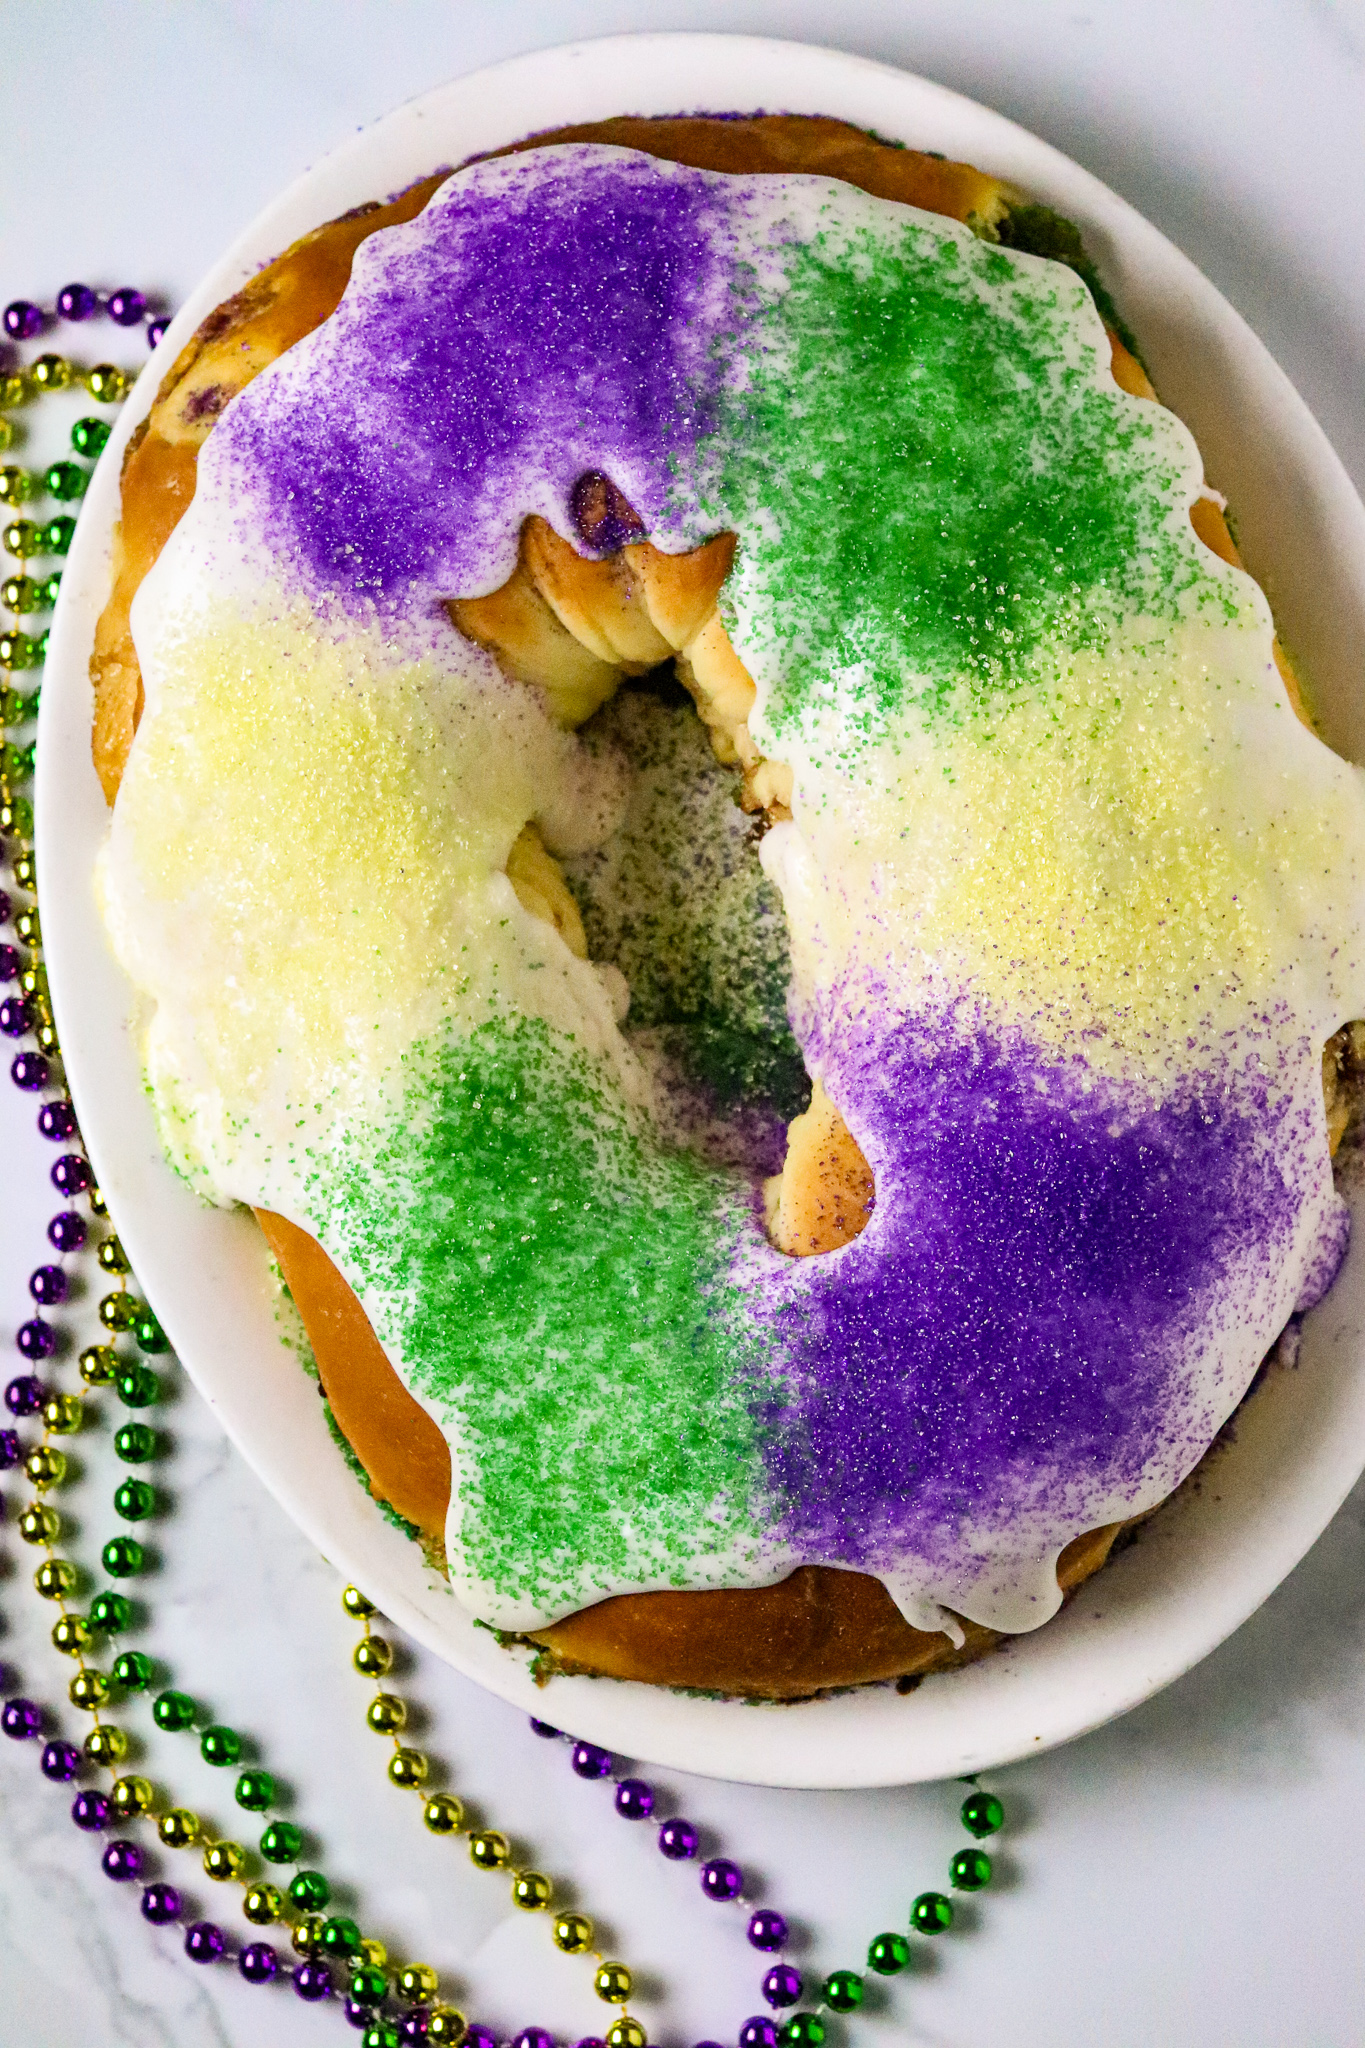 American Cakes - Mardi Gras King Cake Recipe and History | Tori Avey